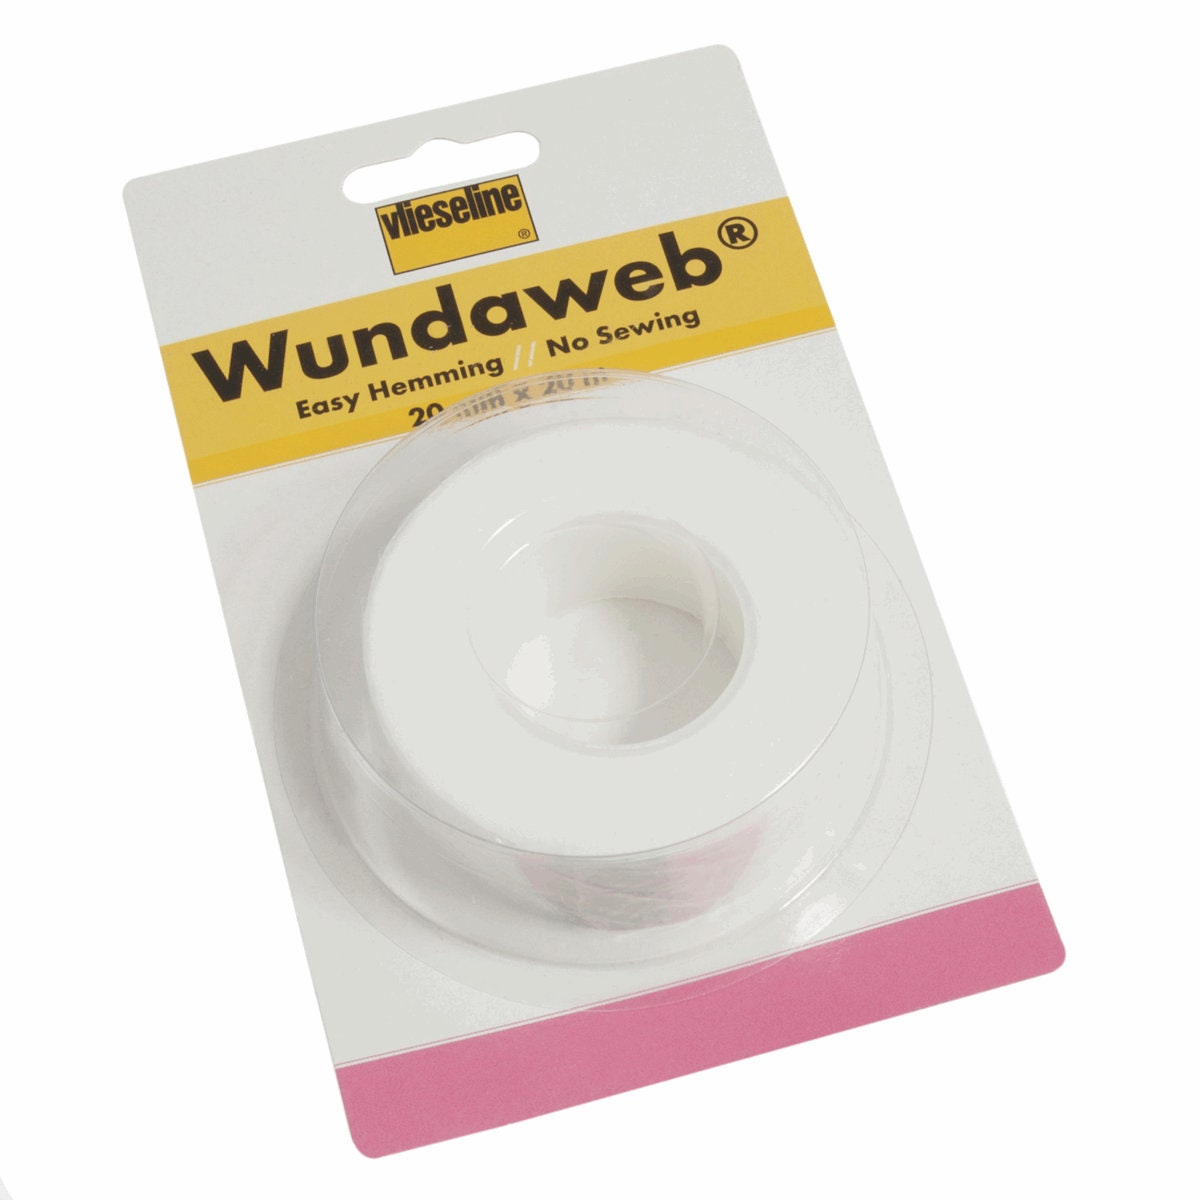 Wonder Web Iron On Hemming Tape Roll Clothes Sewing Turn Up Hem - 8M